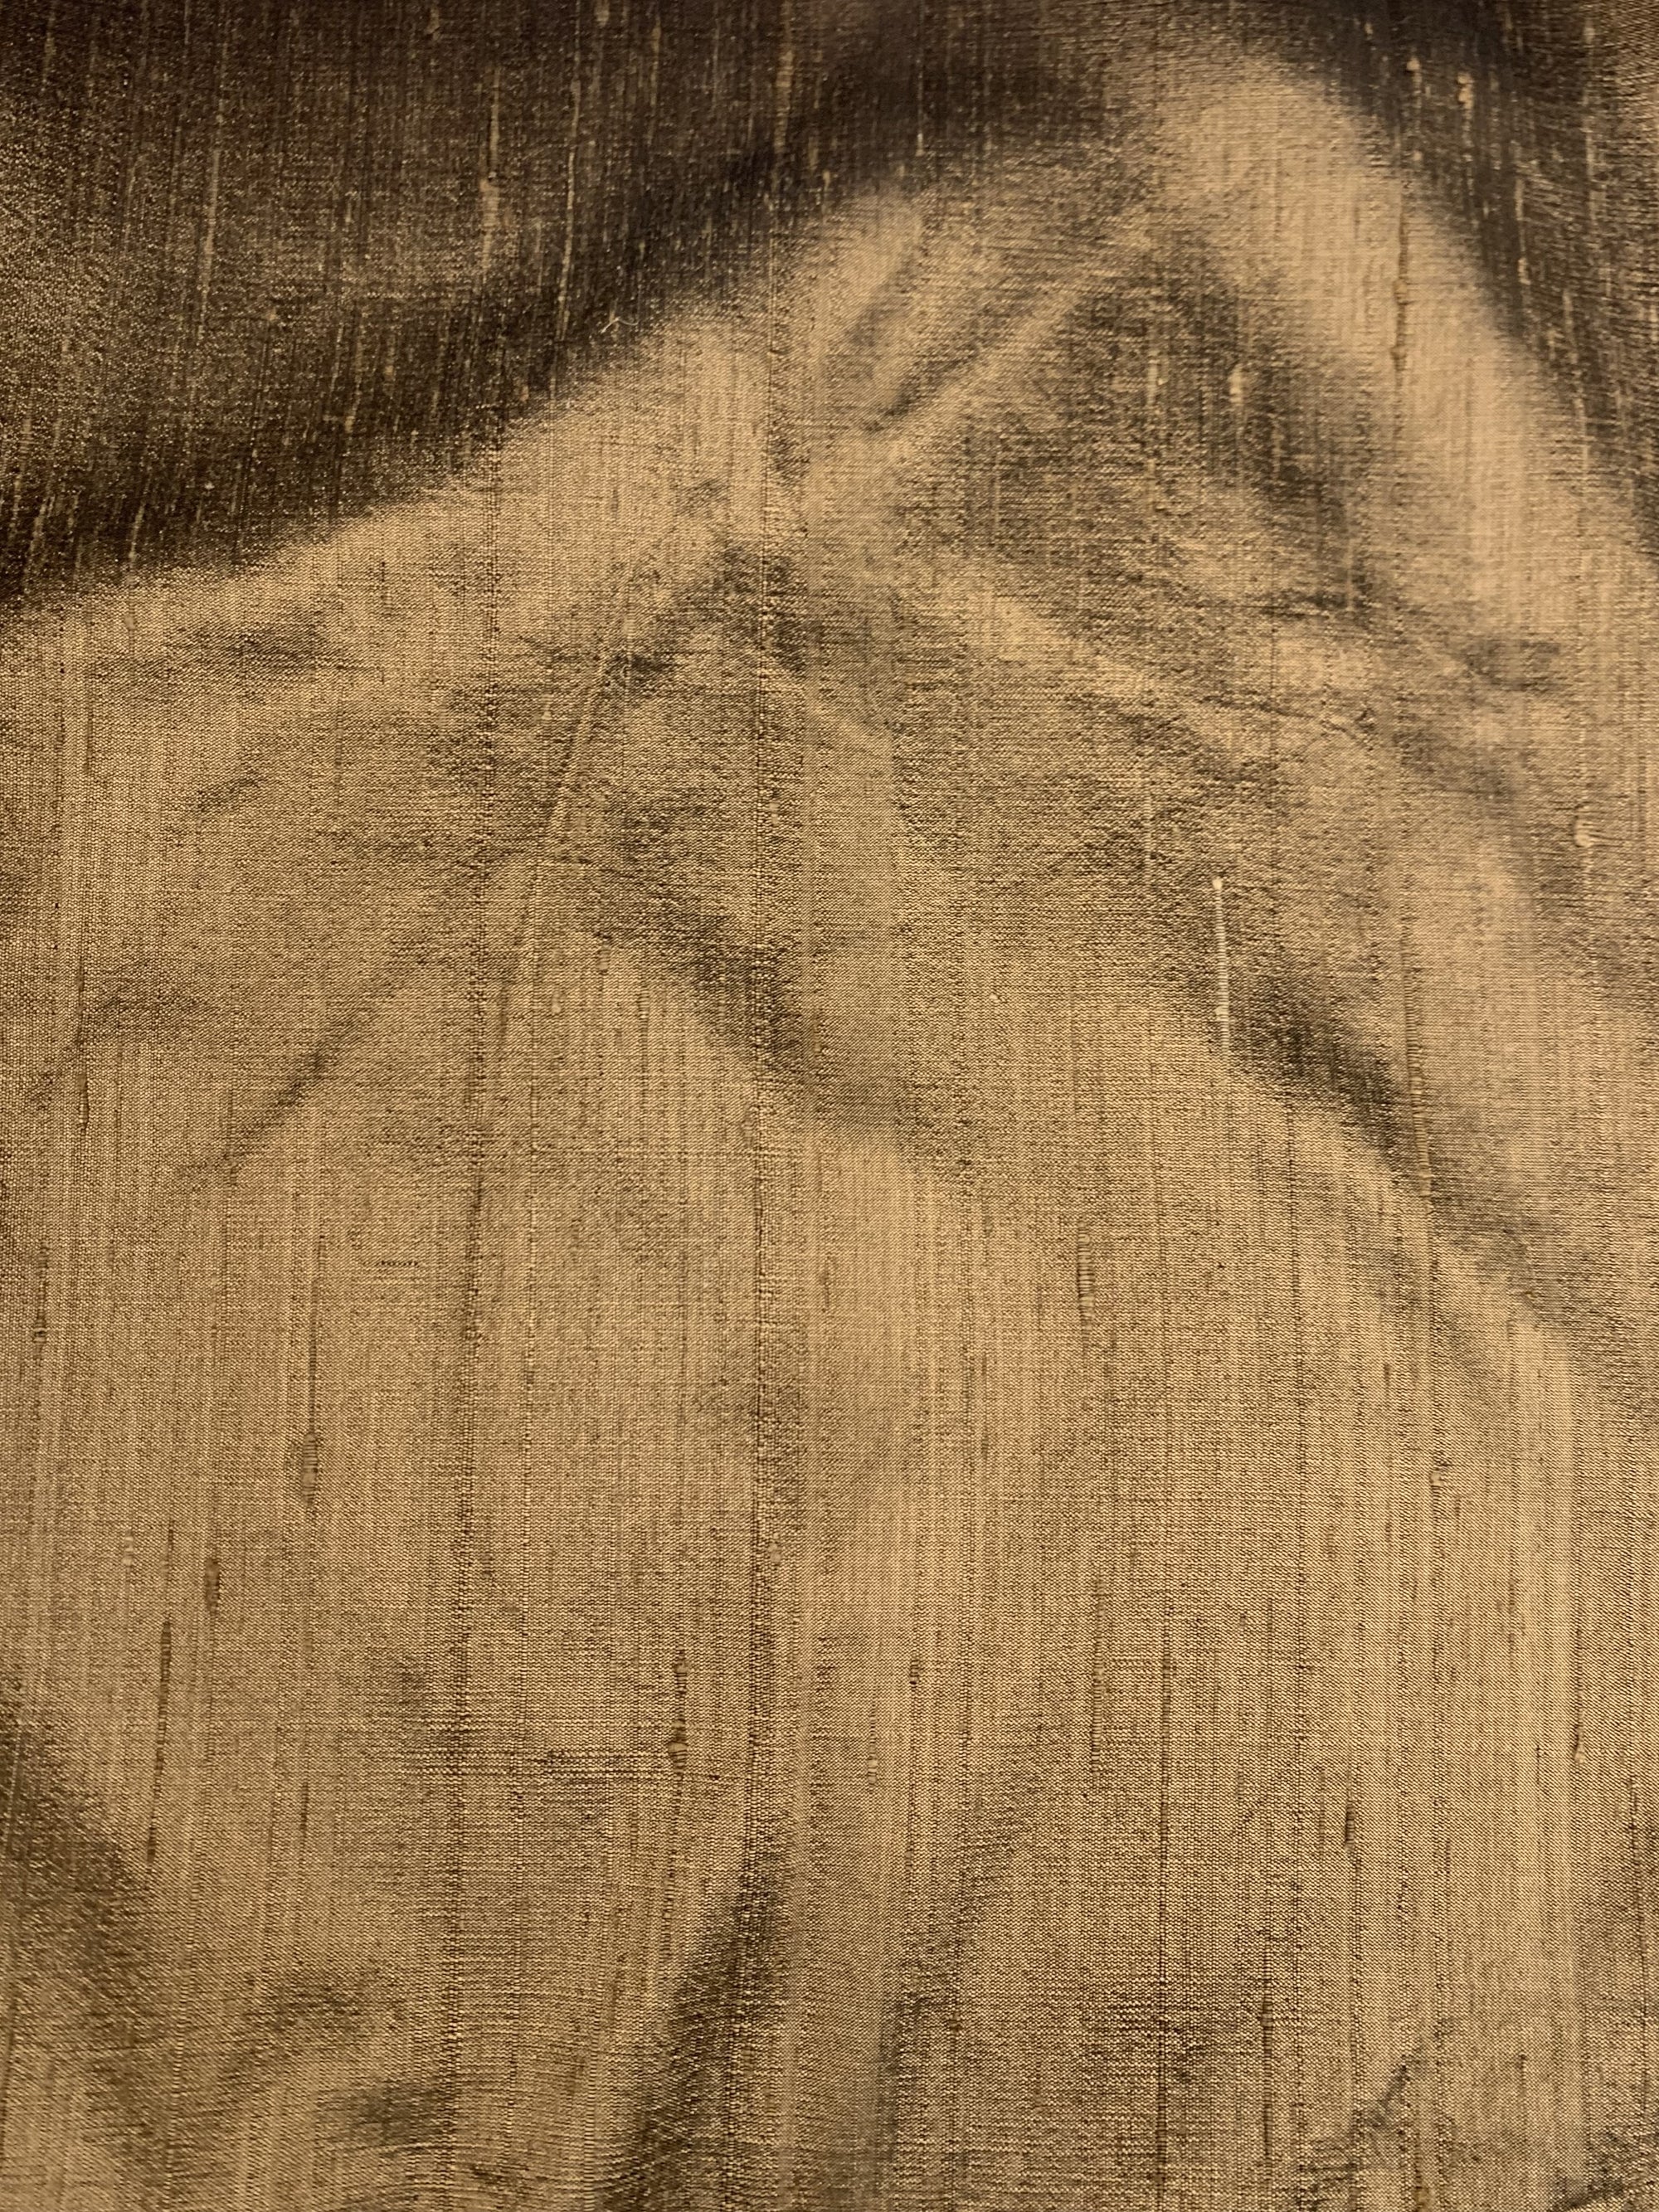 silk dupioni in a Toffee brown